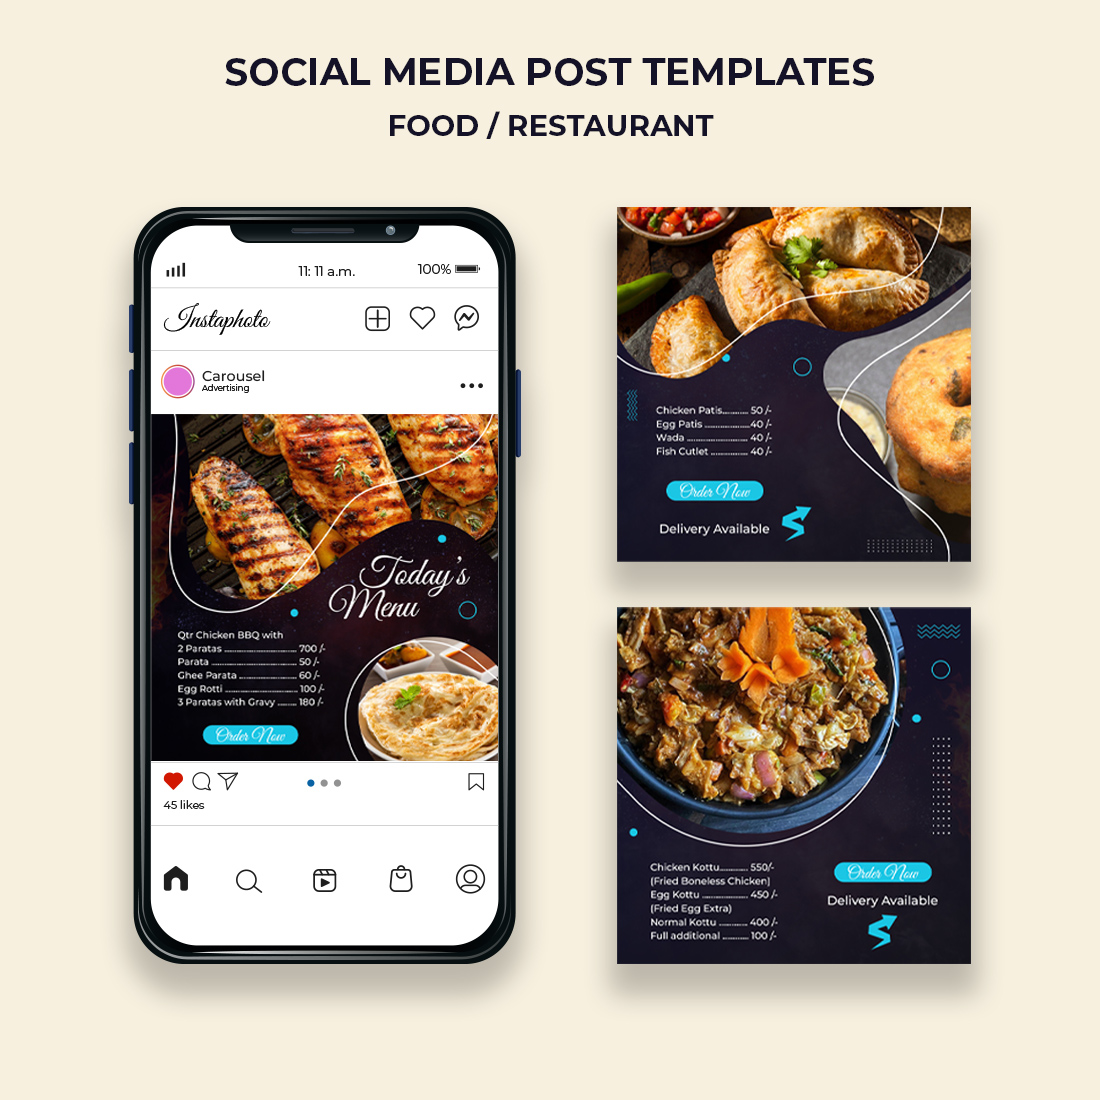 Food / Restaurant Social Media Post Templates preview image.